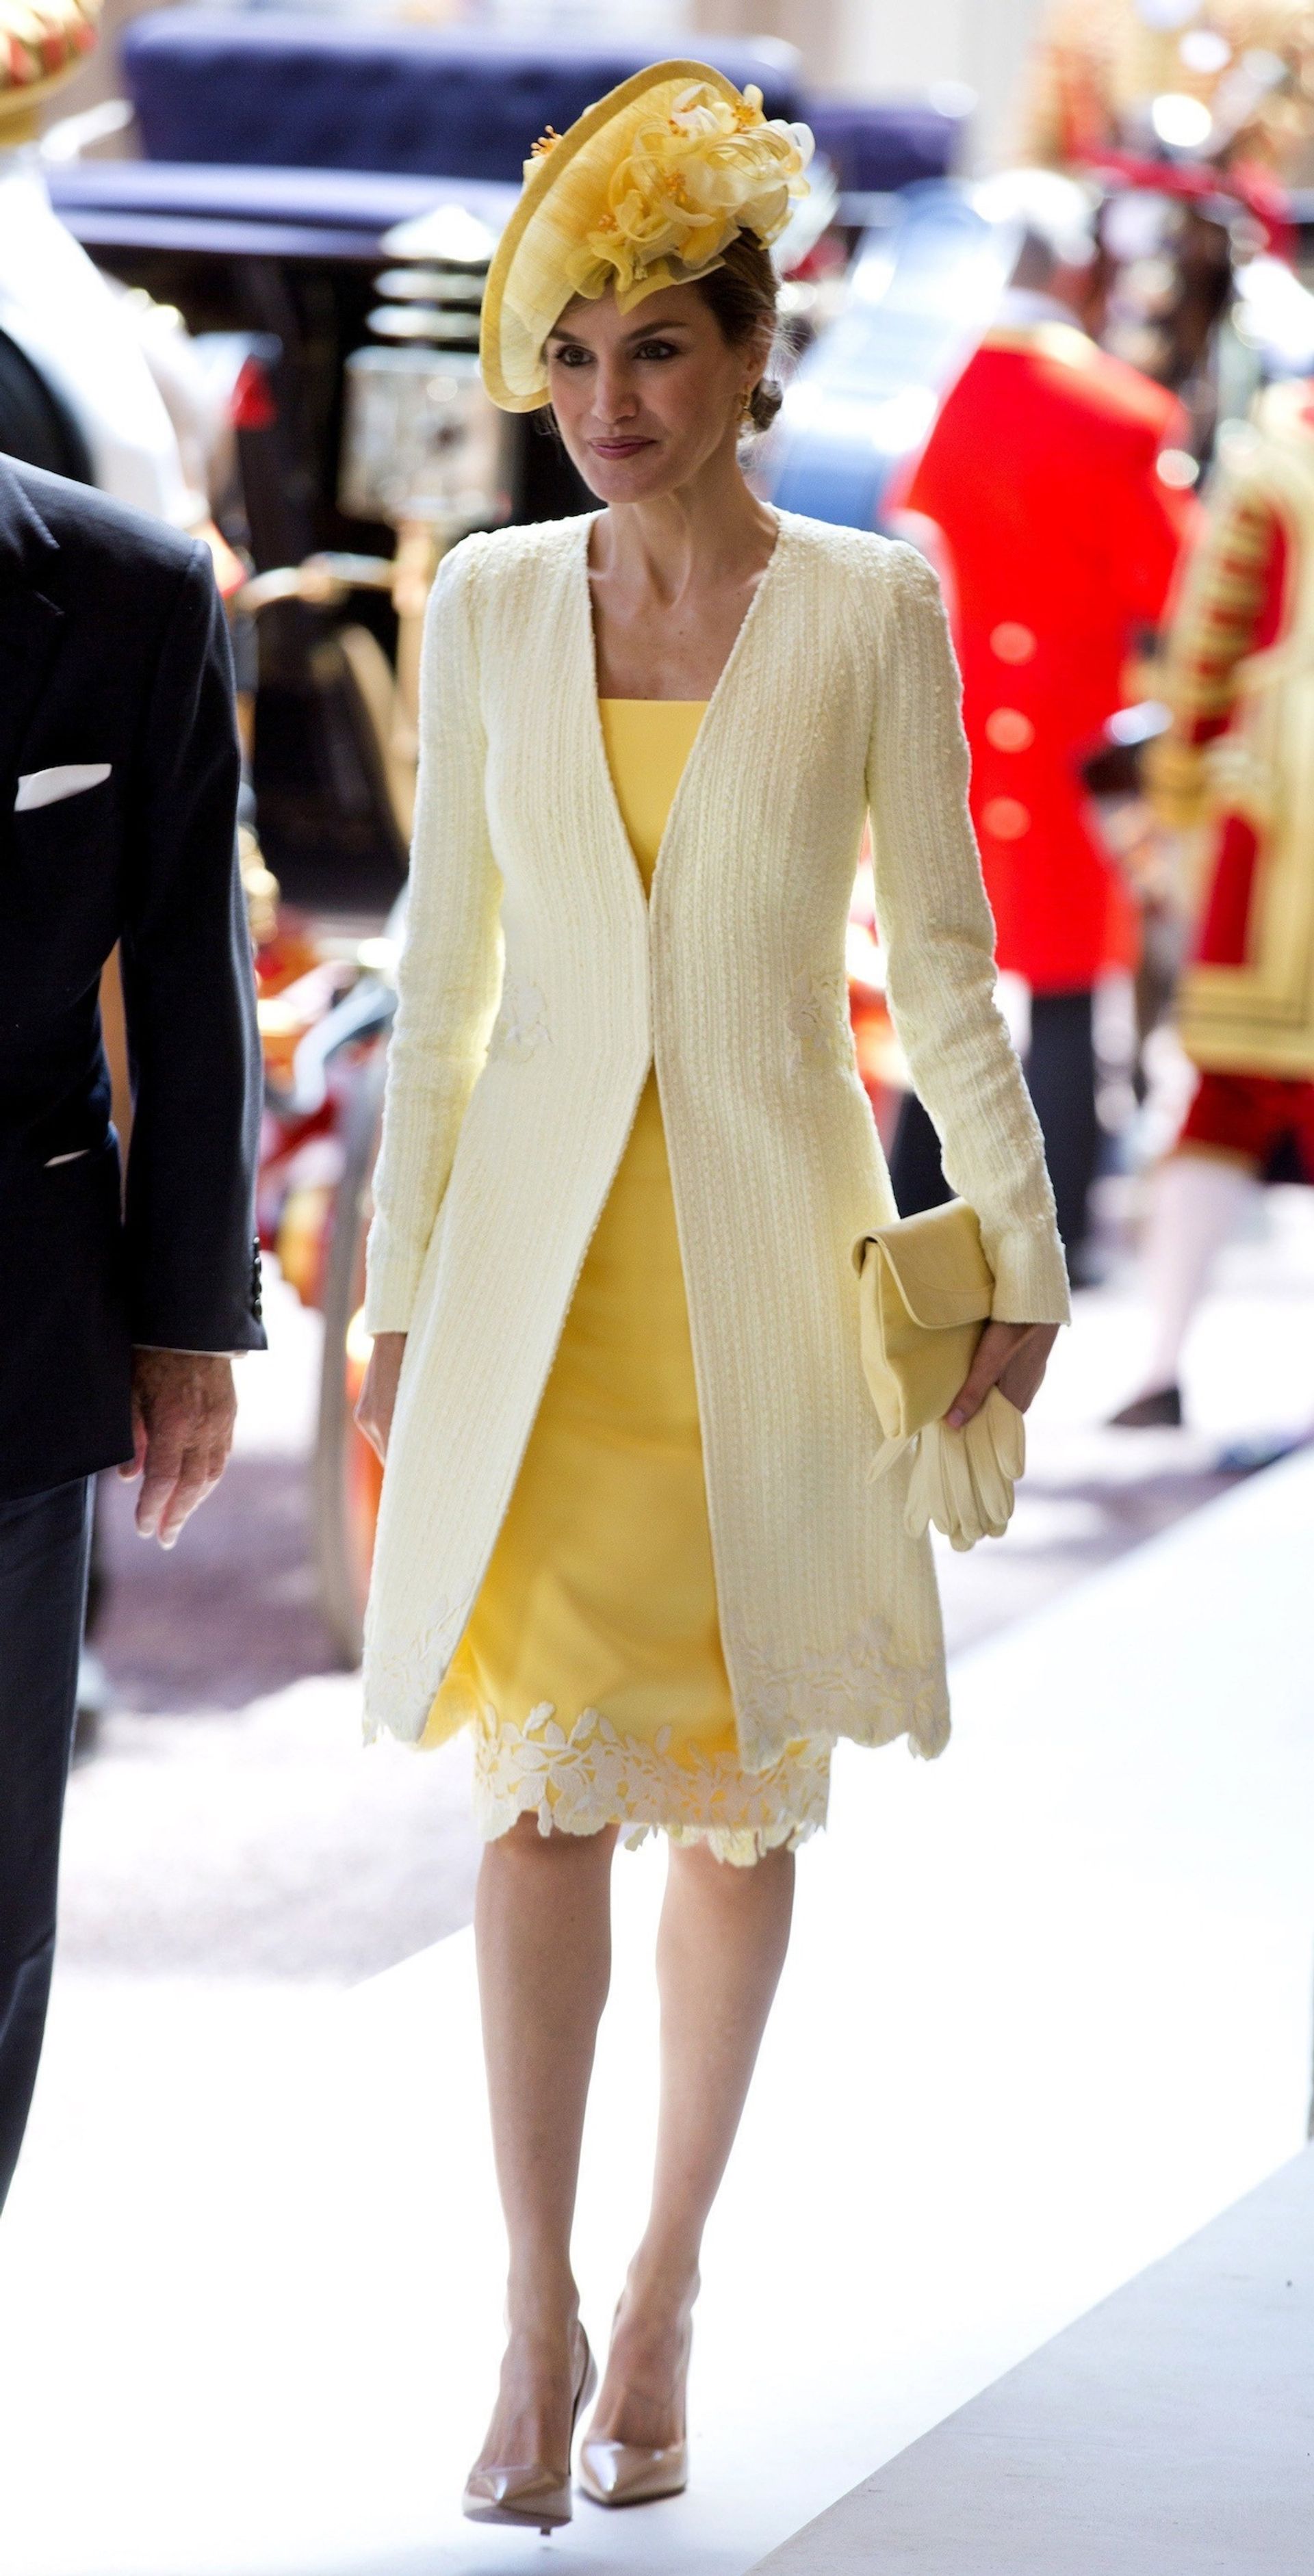 Koningin-Letizia-in-gele-outfit